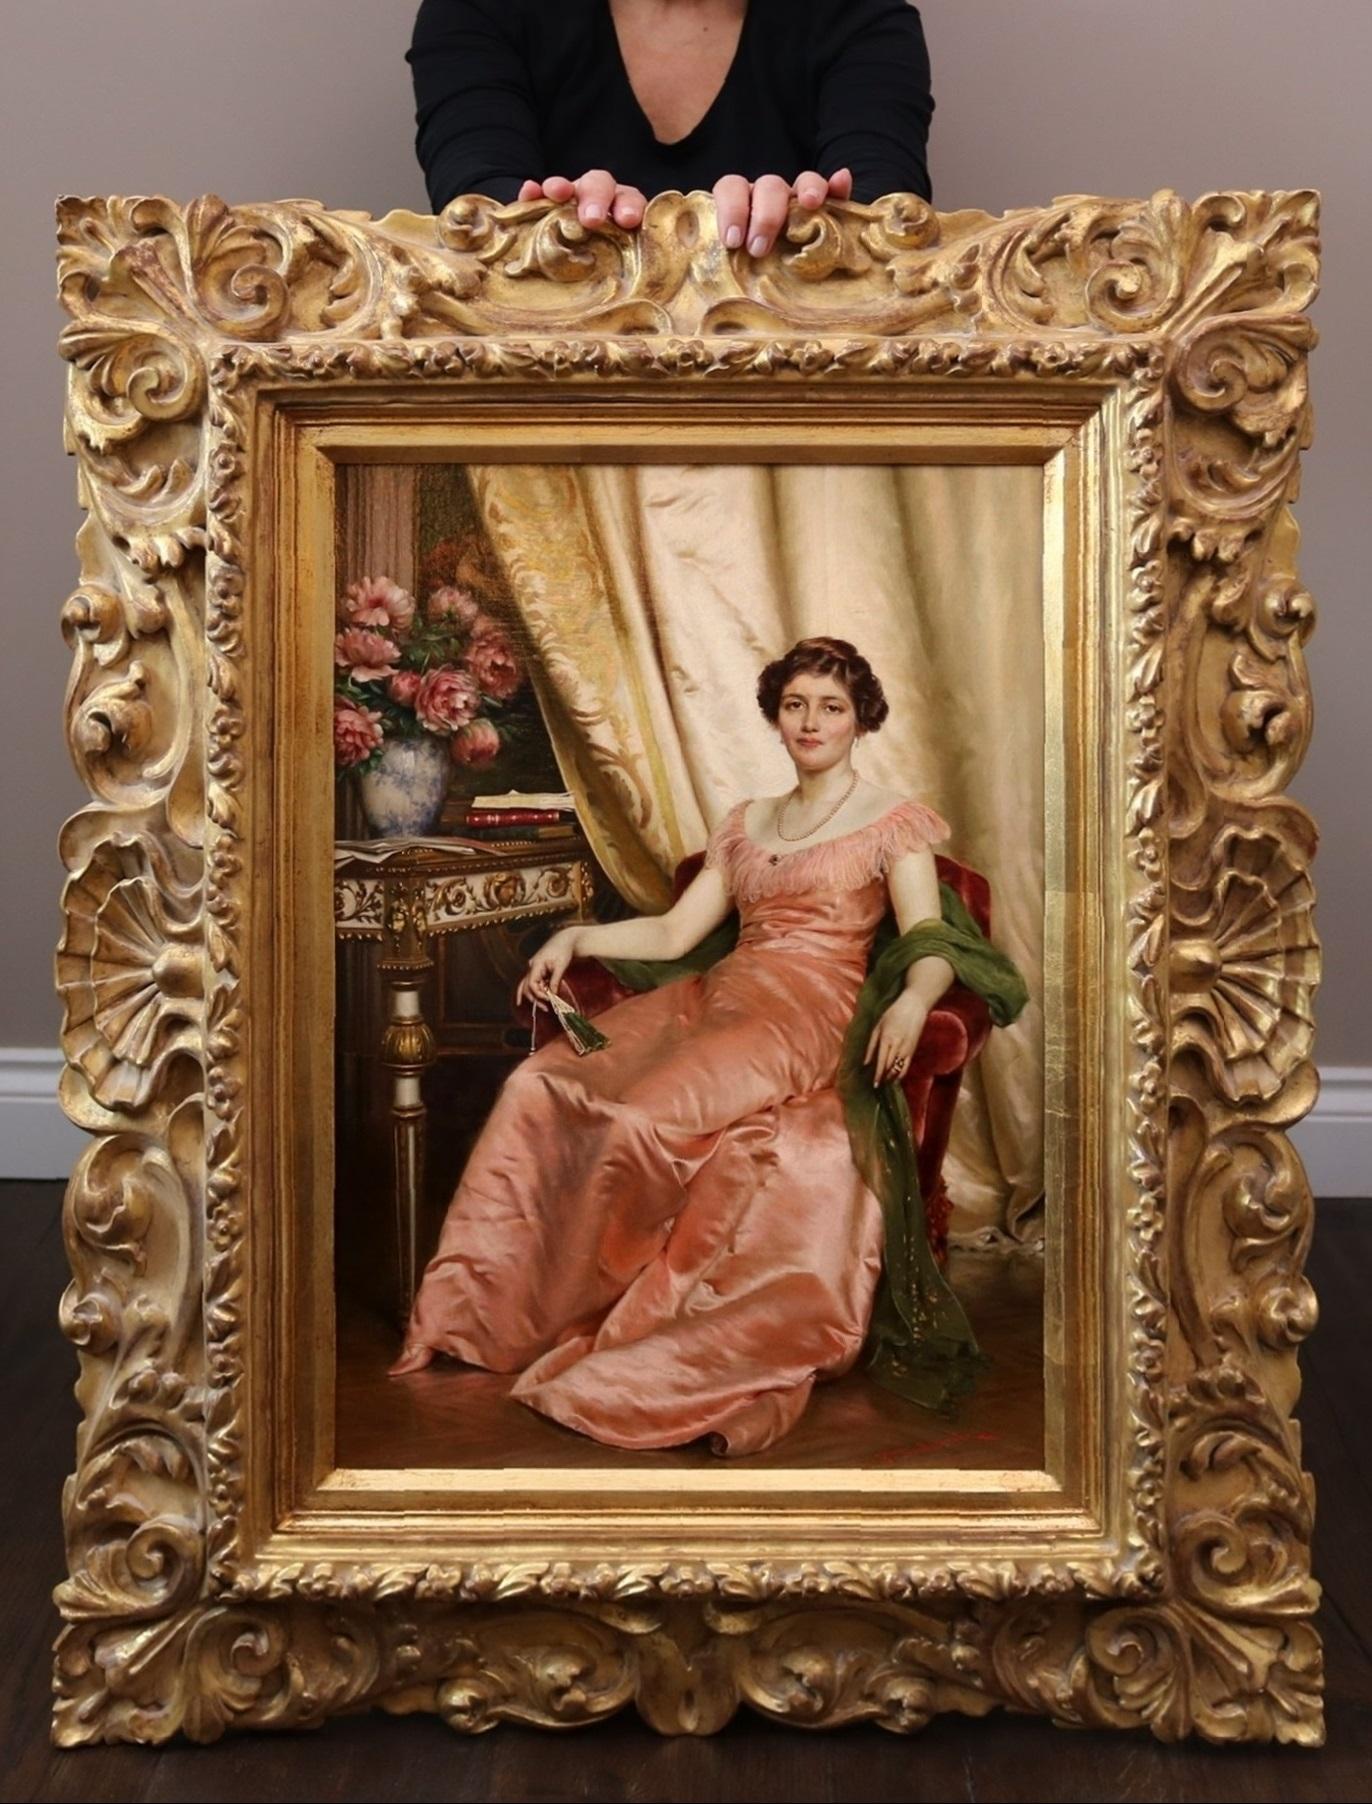 Frédéric Soulacroix Figurative Painting - Regina dei Fiori - 19th Century Oil Painting Society Portrait of Italian Beauty